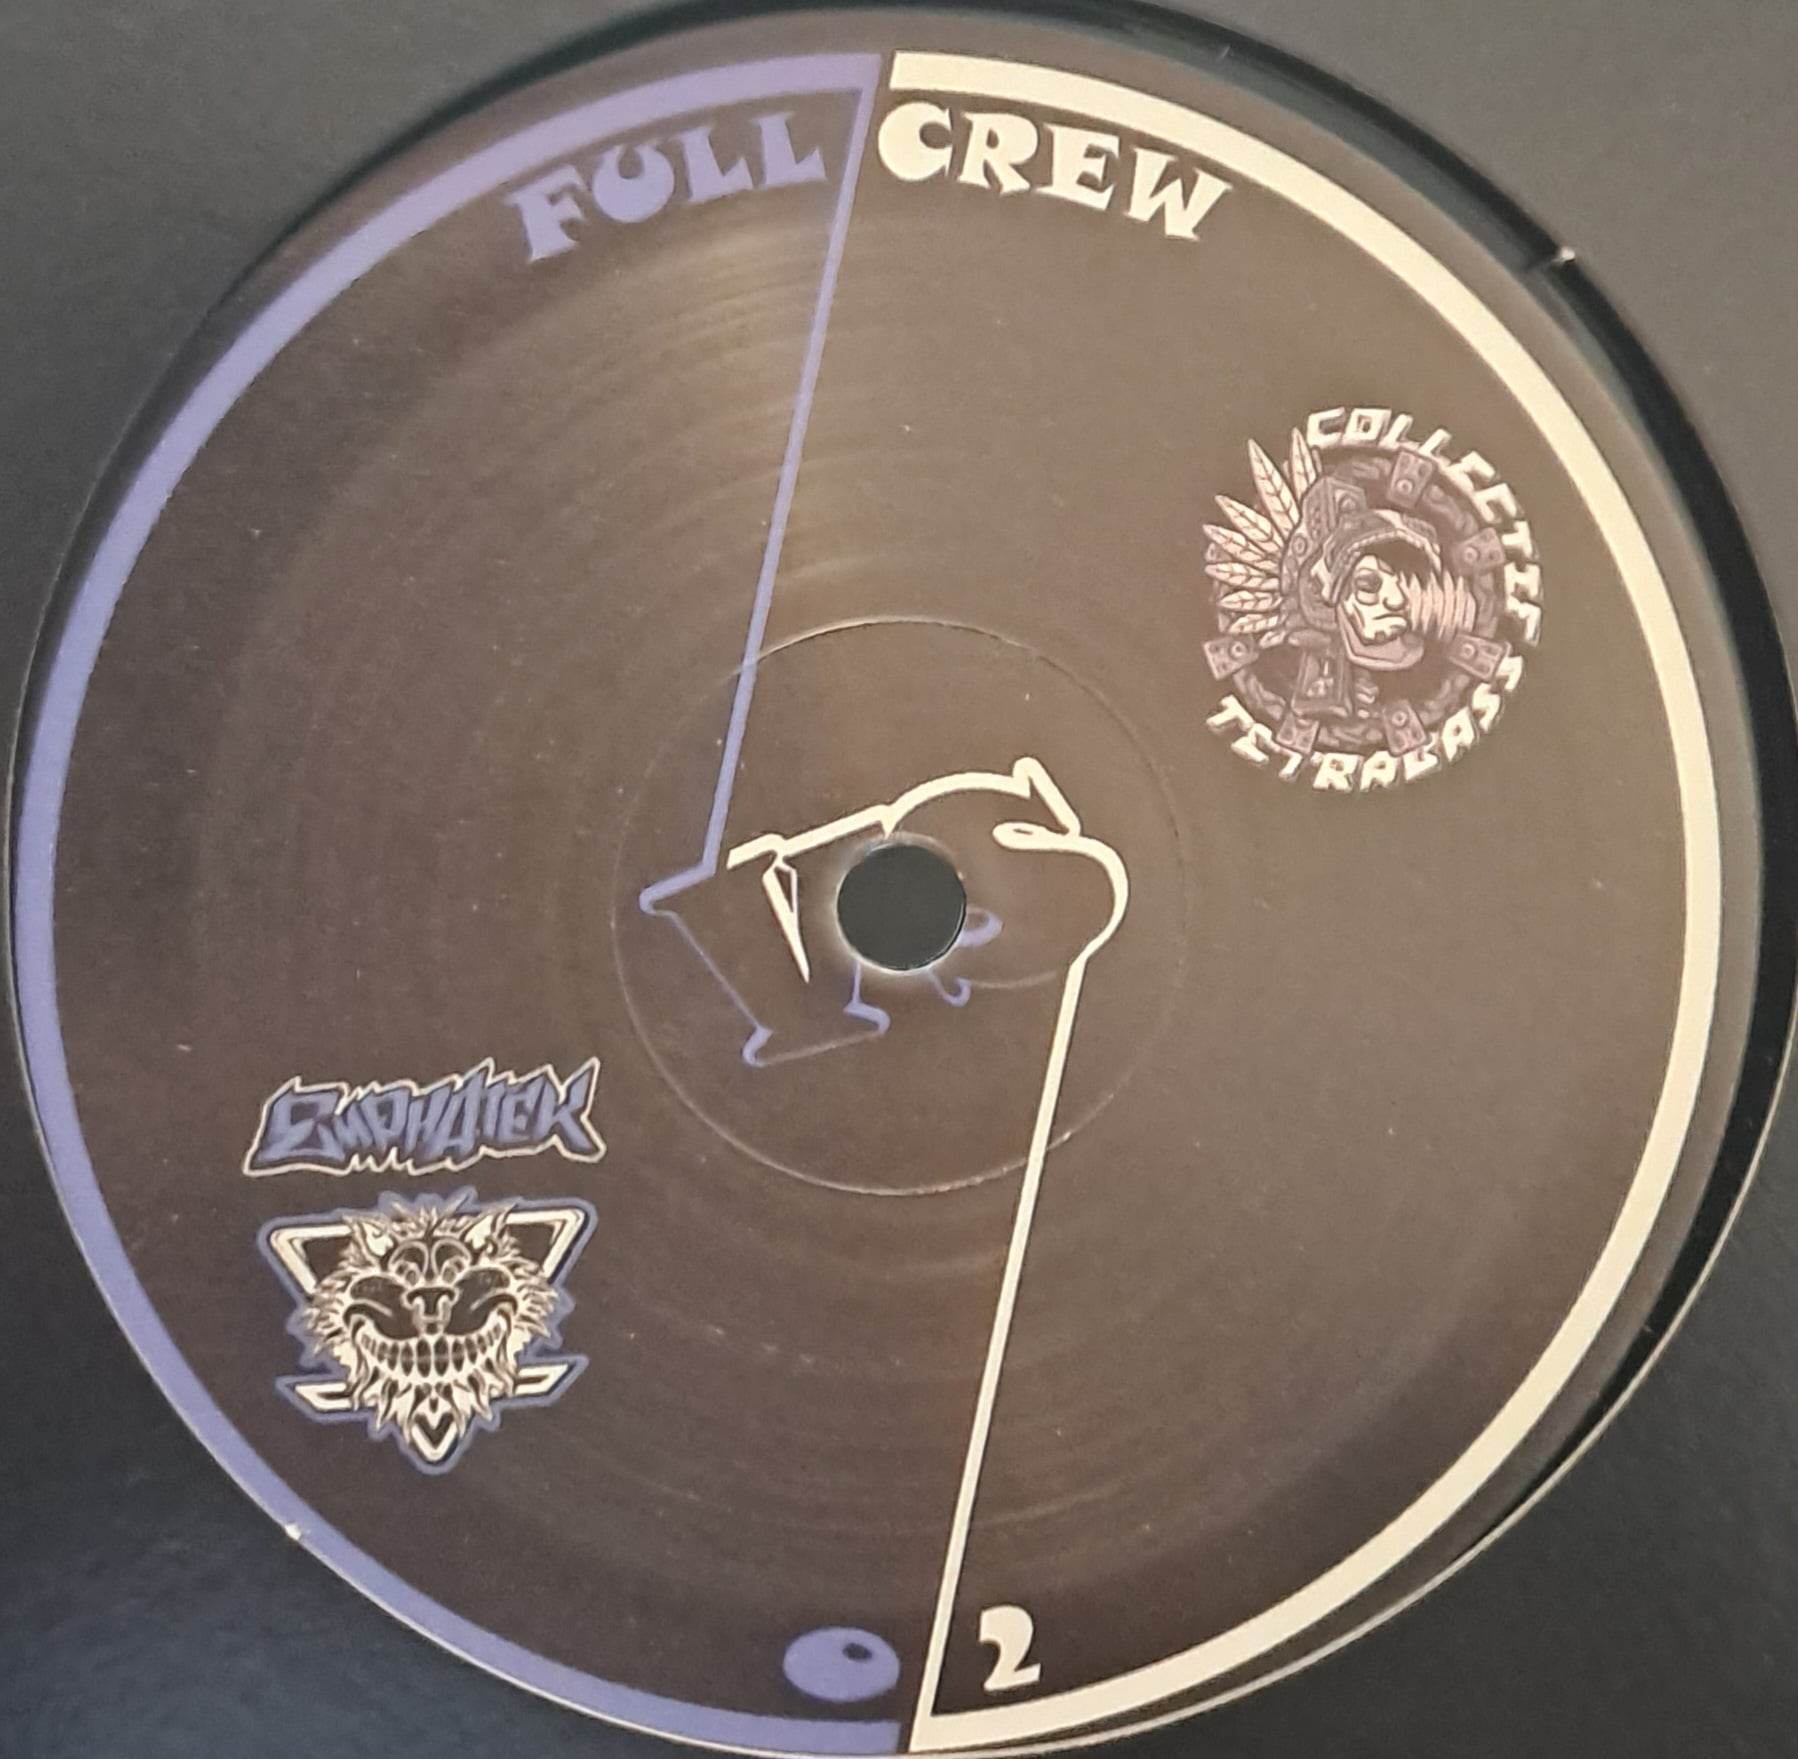 Full Crew 02 (dernières copies en stock) - vinyle freetekno